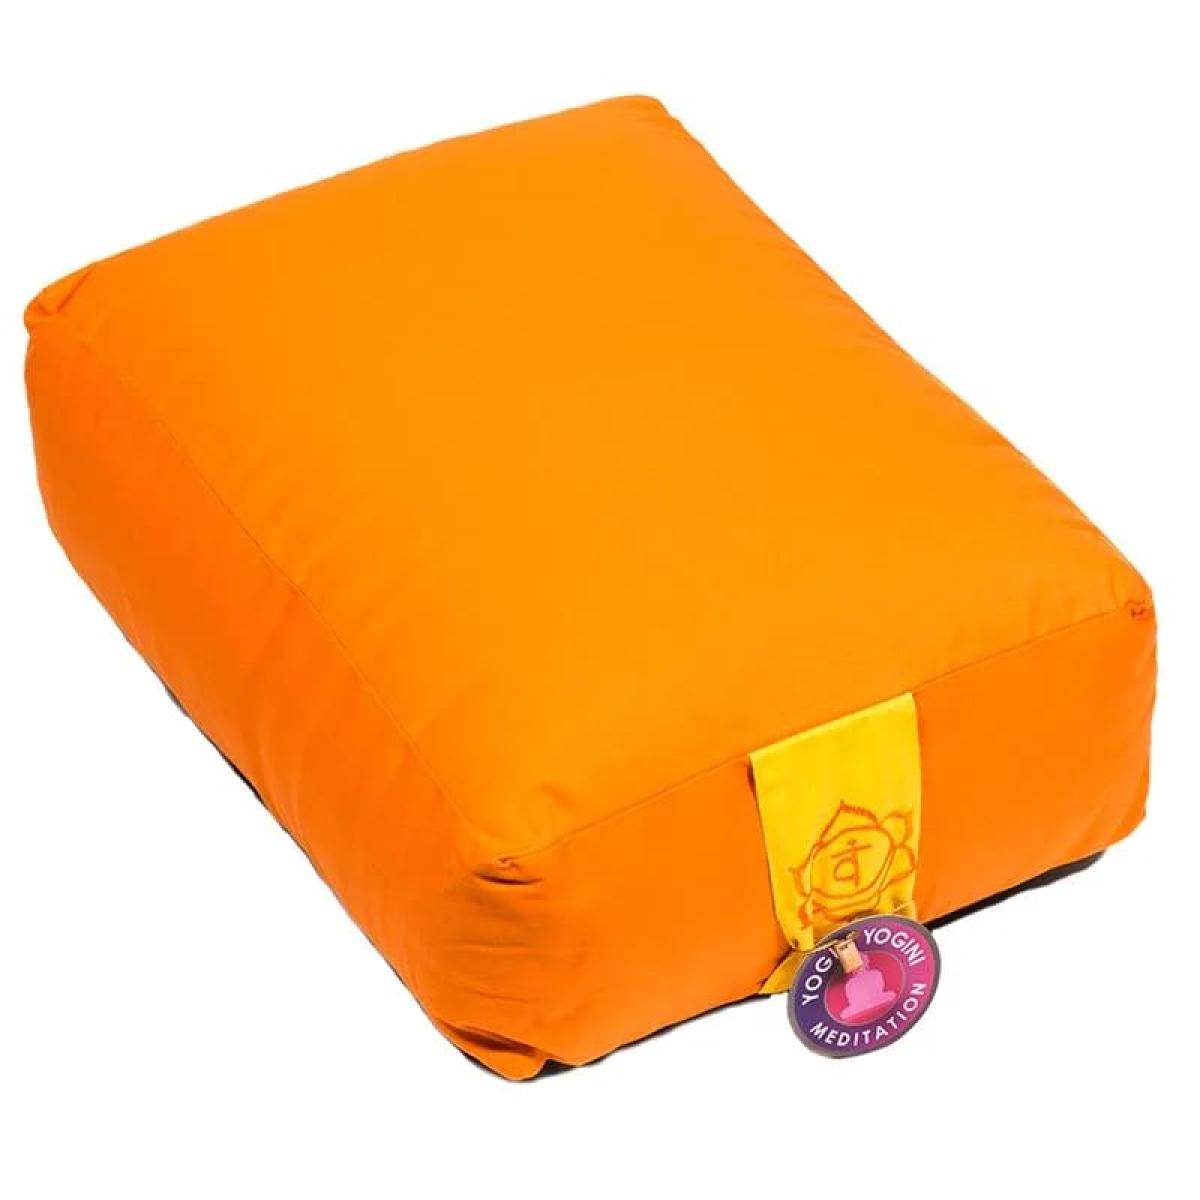 Meditation cushion set 7 chakras - rectangular ➤ www.bokken-shop.de buy › Yoga cushions ✓ Suitable for meditation, seminars. Your meditation specialist shop!